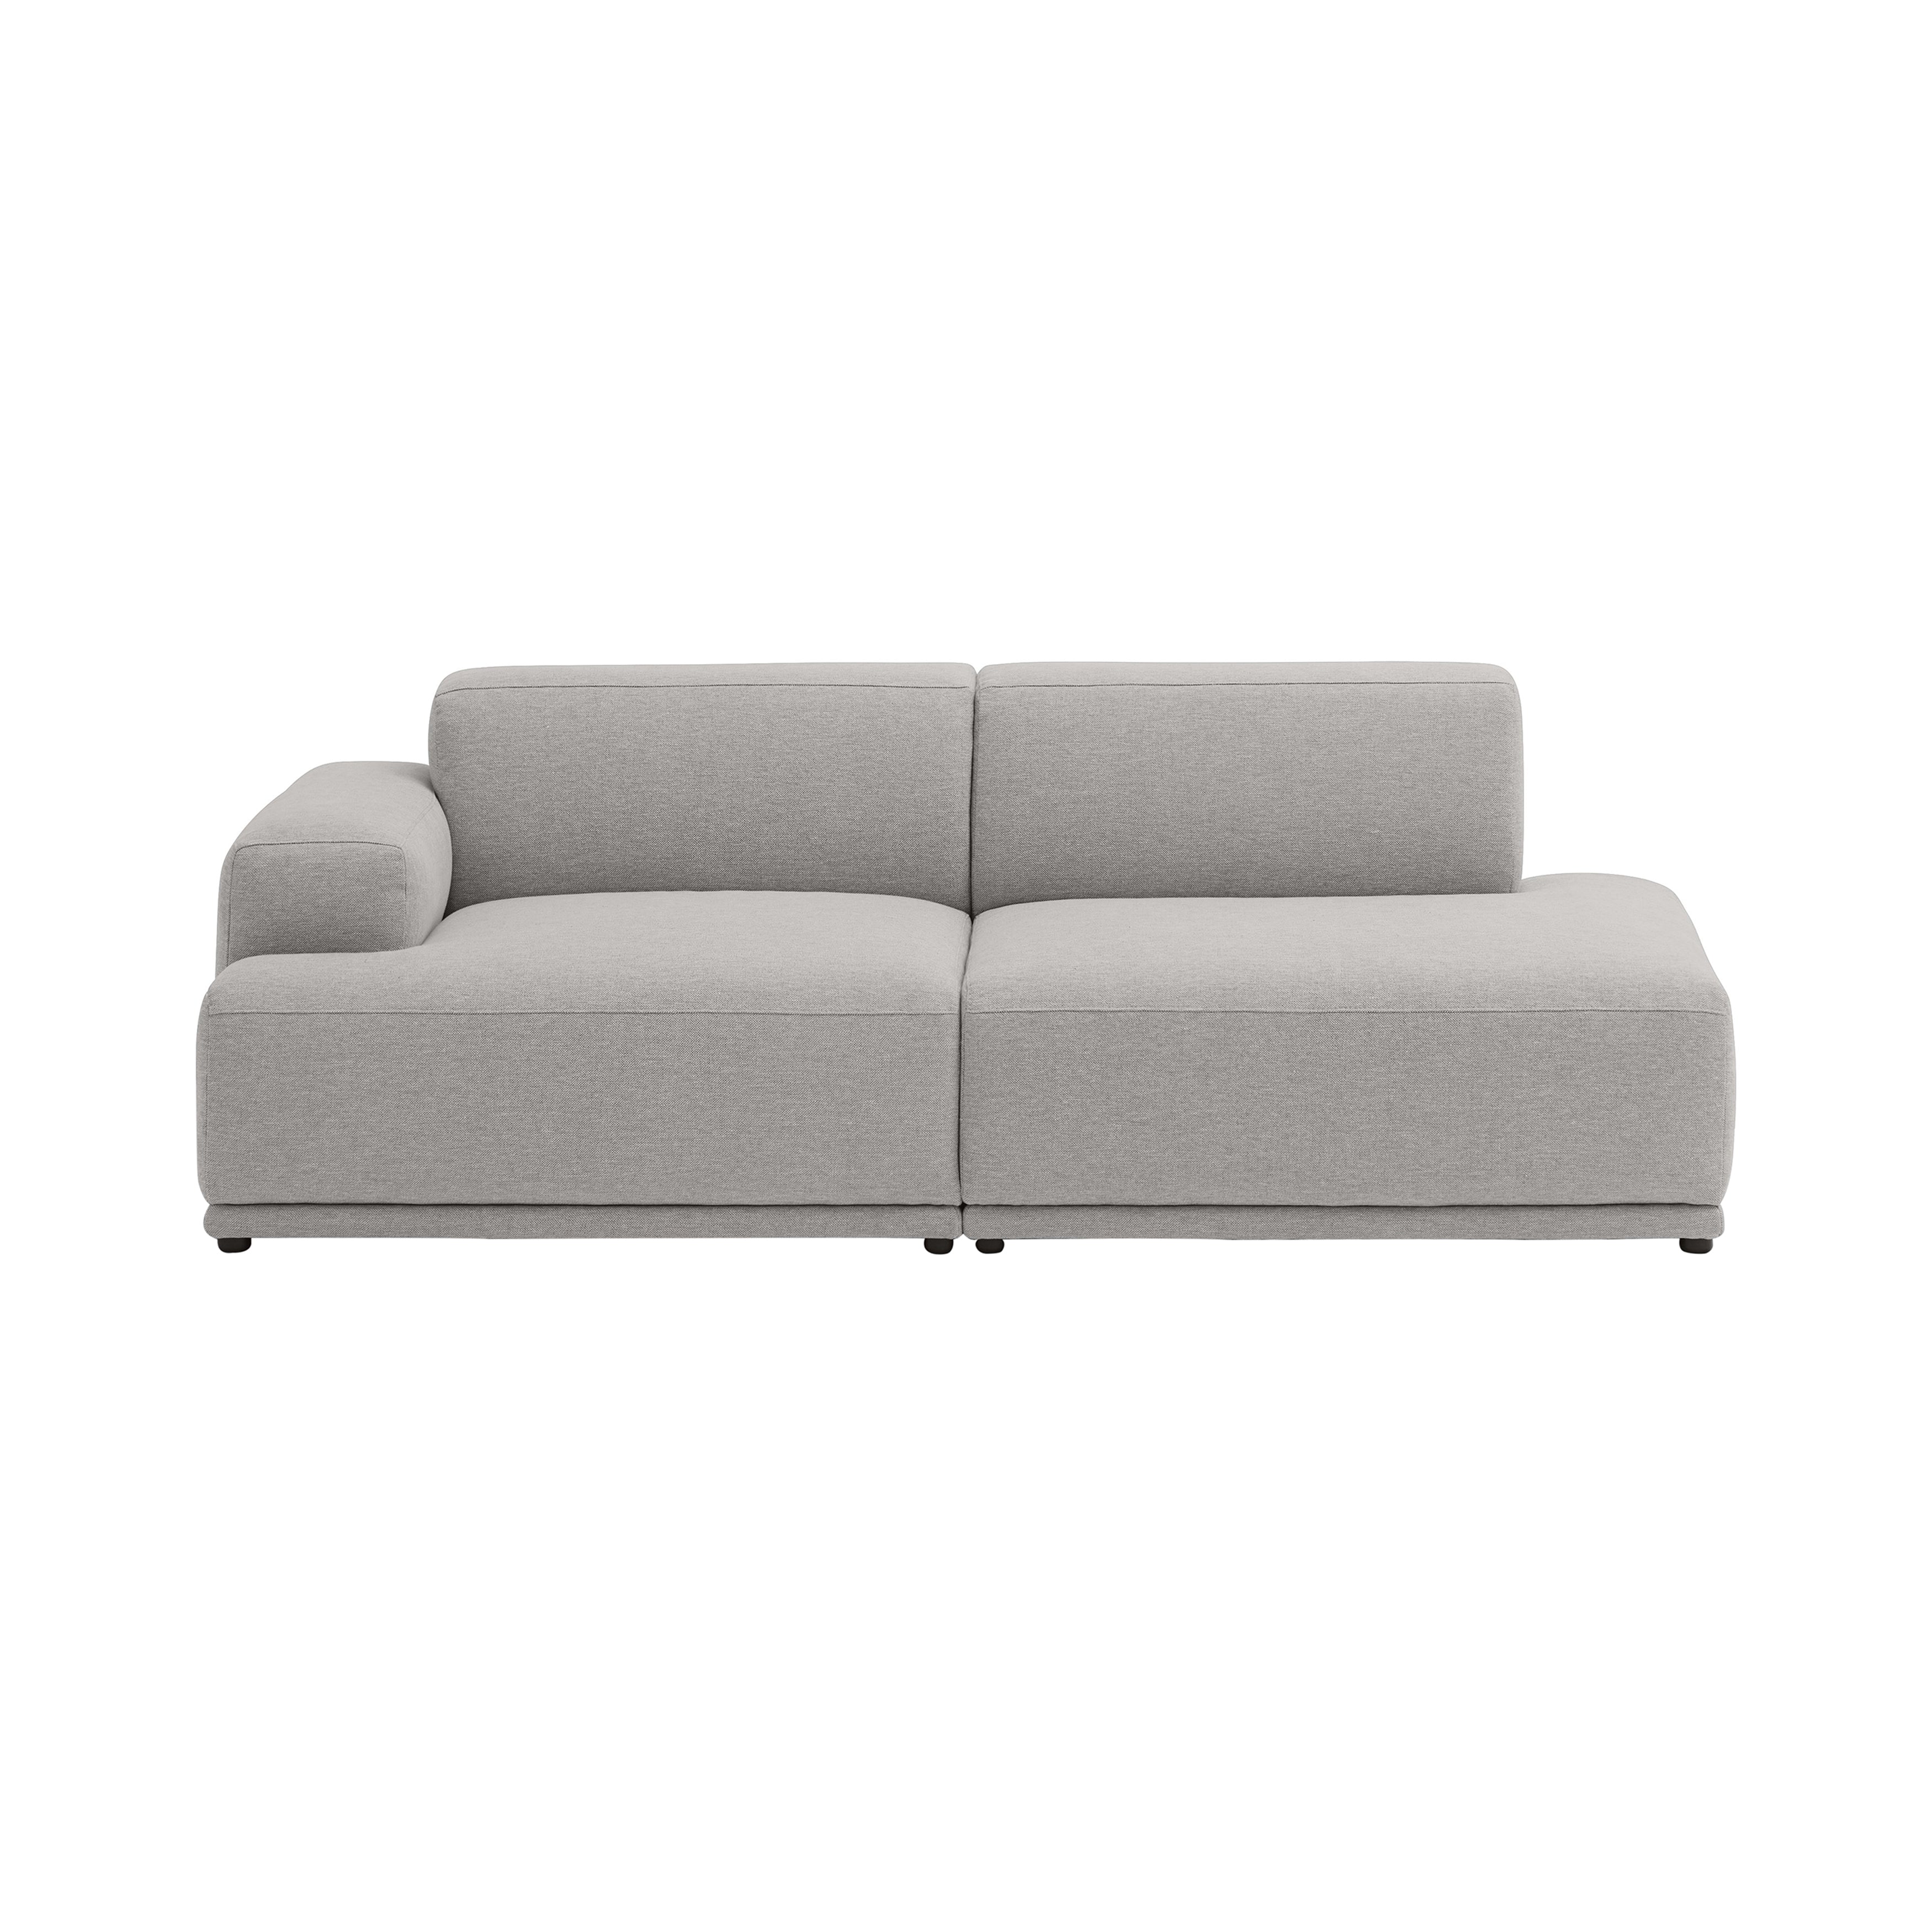 Connect Soft Modular Sofa: 2 Seater + Configuration 2